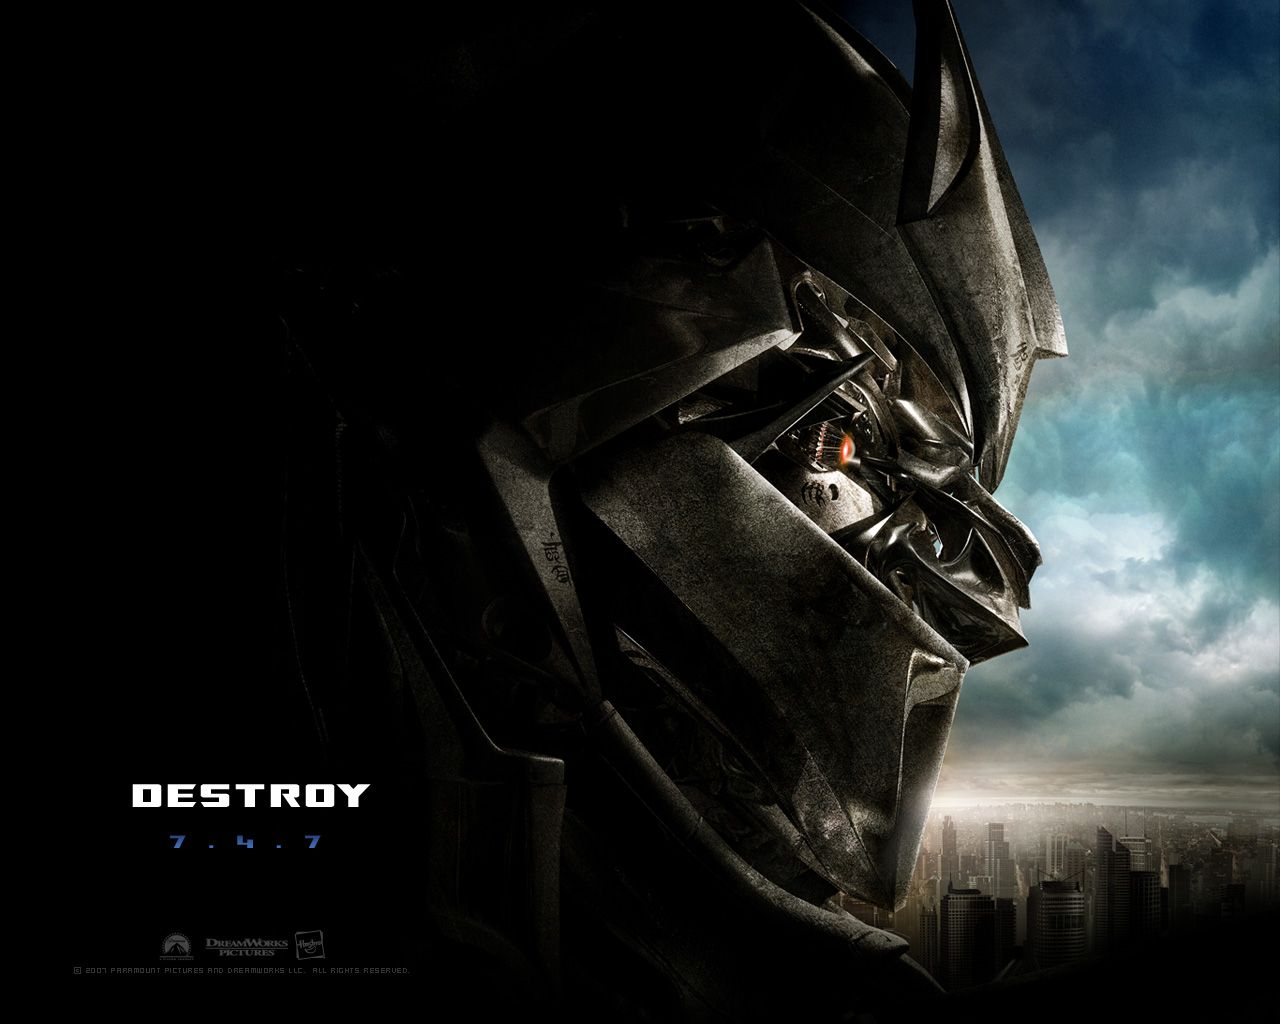 Transformers Movie Megatron - Transformers Wallpaper 35015 - Fanpop